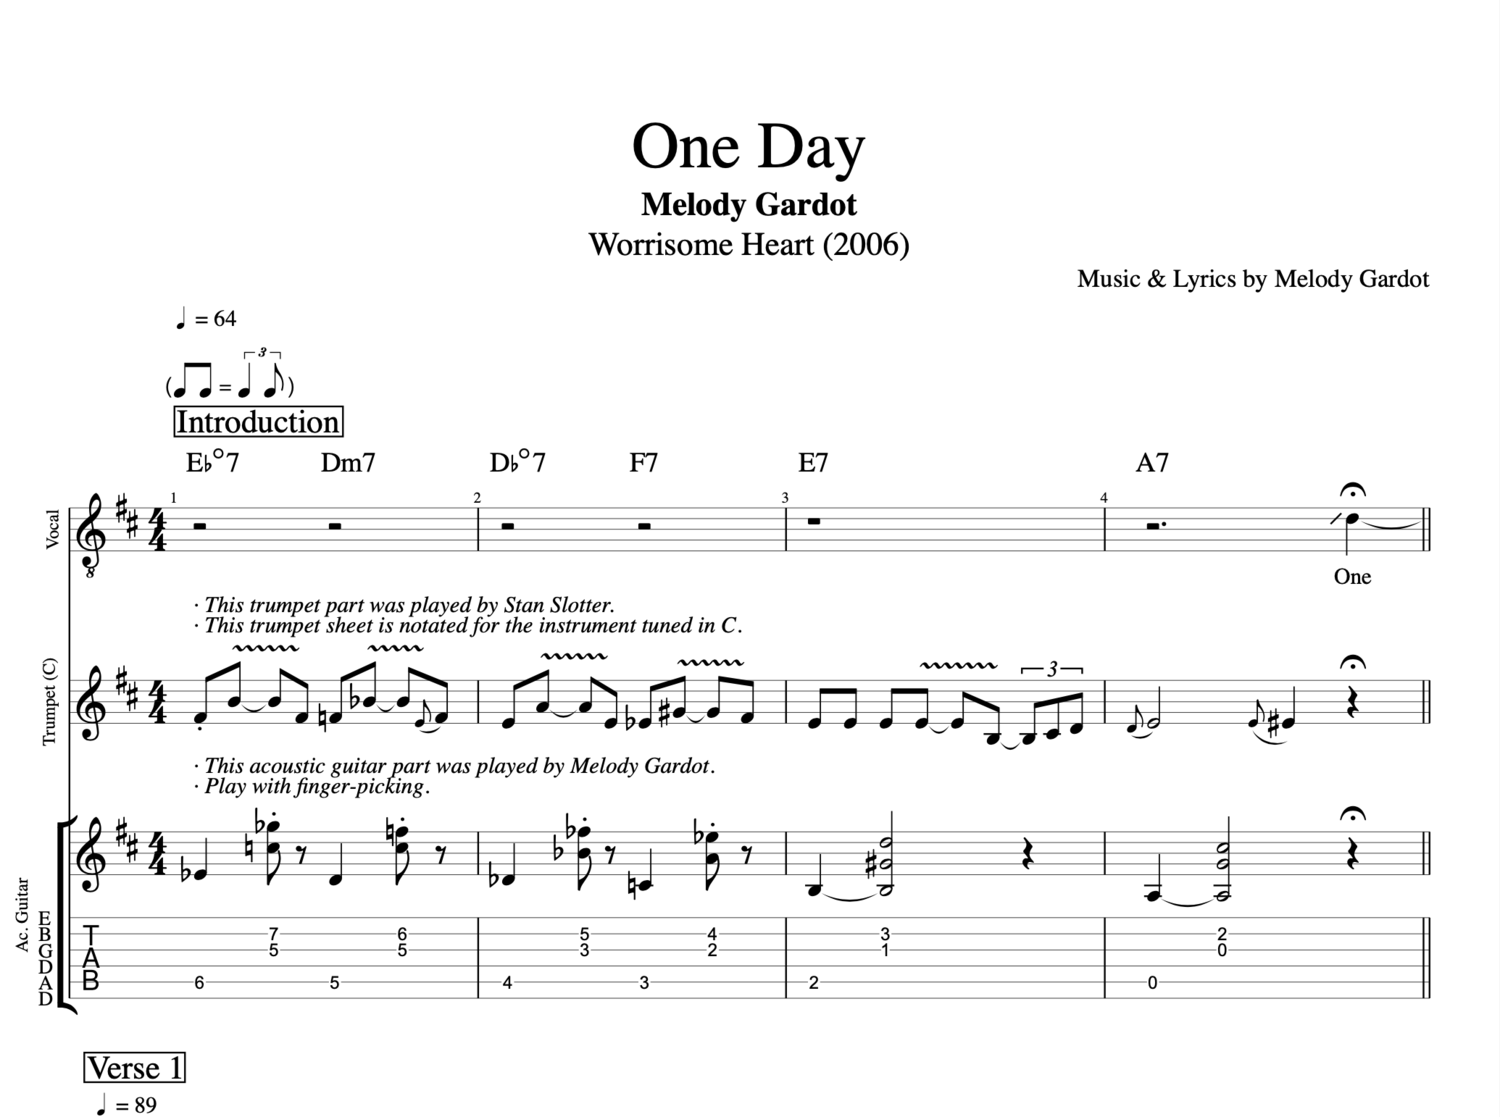 One Day Melody Gardot Guitar Voice Trumpet Tab Chords Sheet Music Lyrics Score Play Like The Greats Com